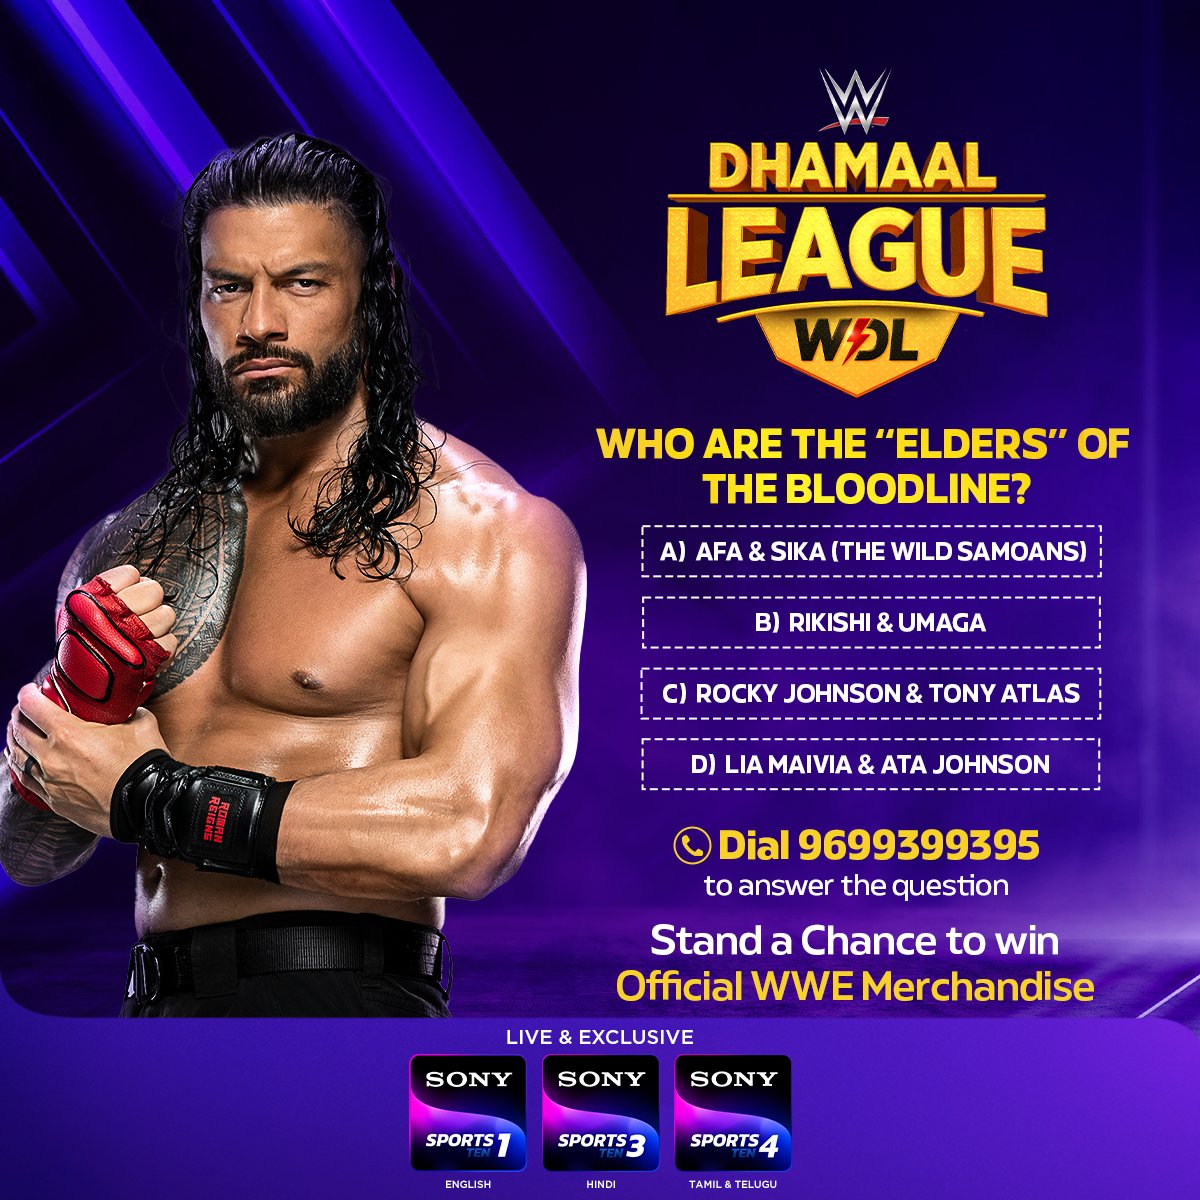 One for the die-hard fans of The Bloodline 🙌 🩸 #SonySportsNetwork #WWE #WWEIndia #WWEDhamaalLeague